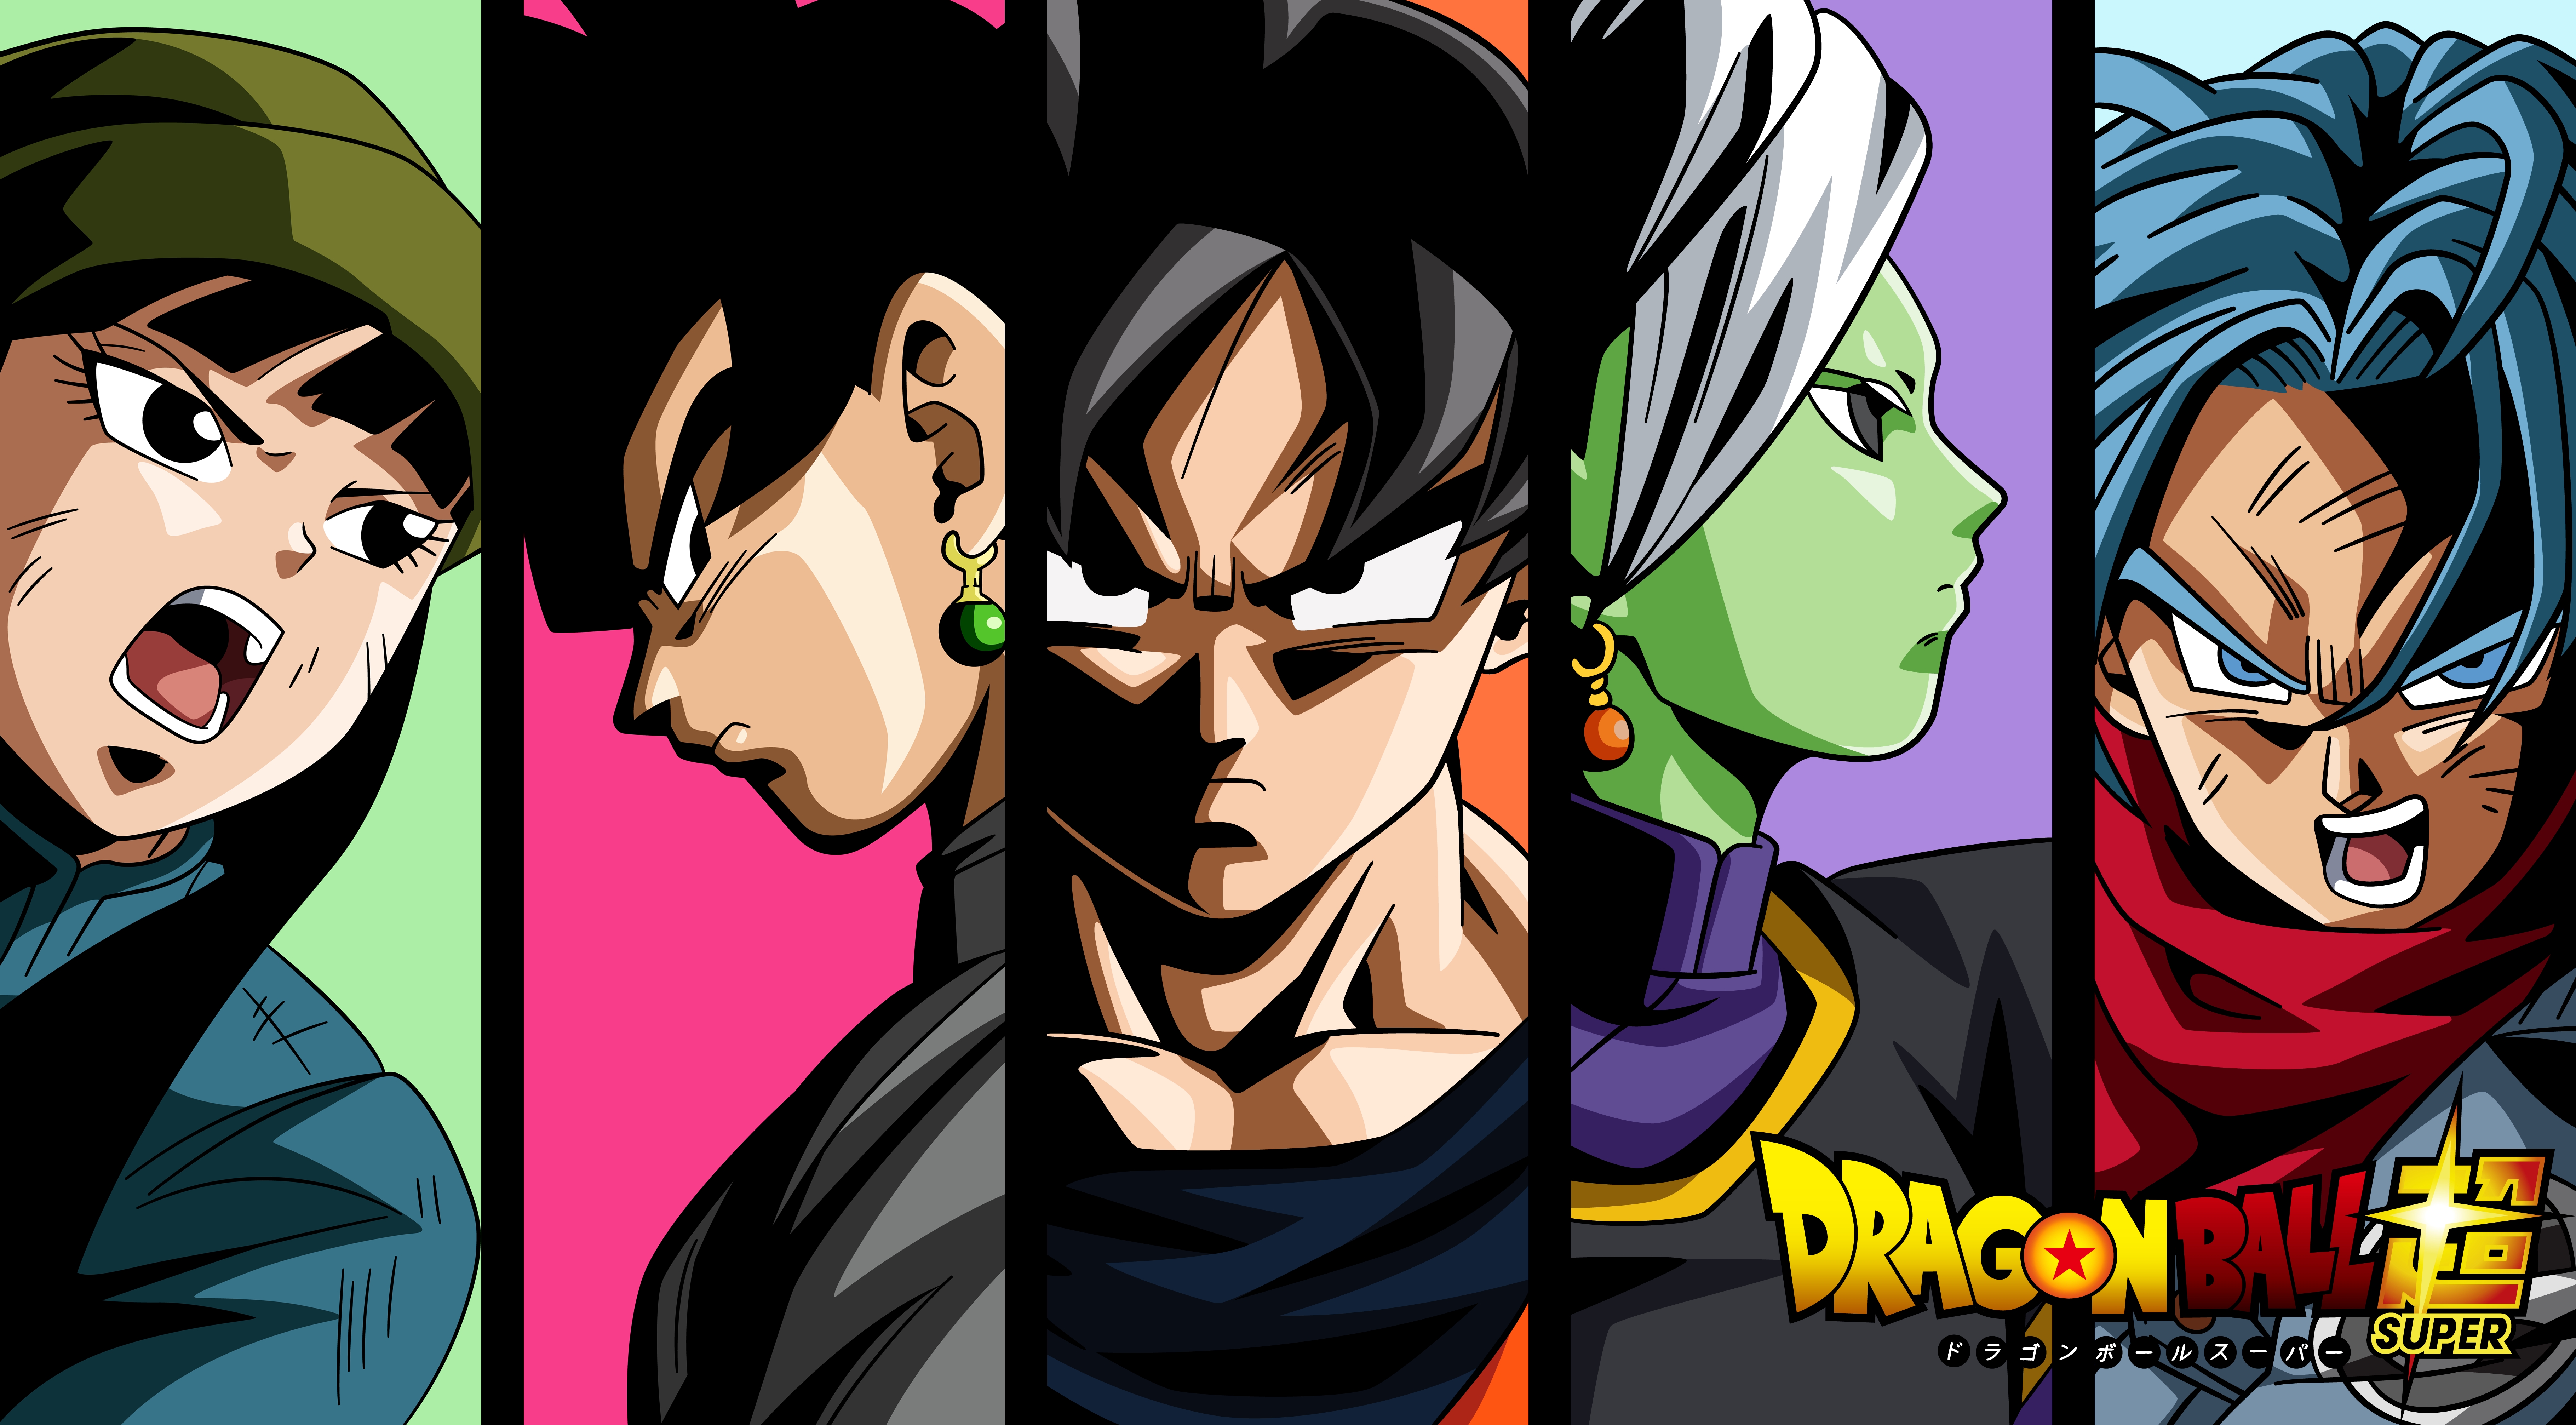 Dragon Ball Super, Mai, Black Goku, Goku, Zamasu and Future Trunks Saga  Anime Wallpaper ID:3049